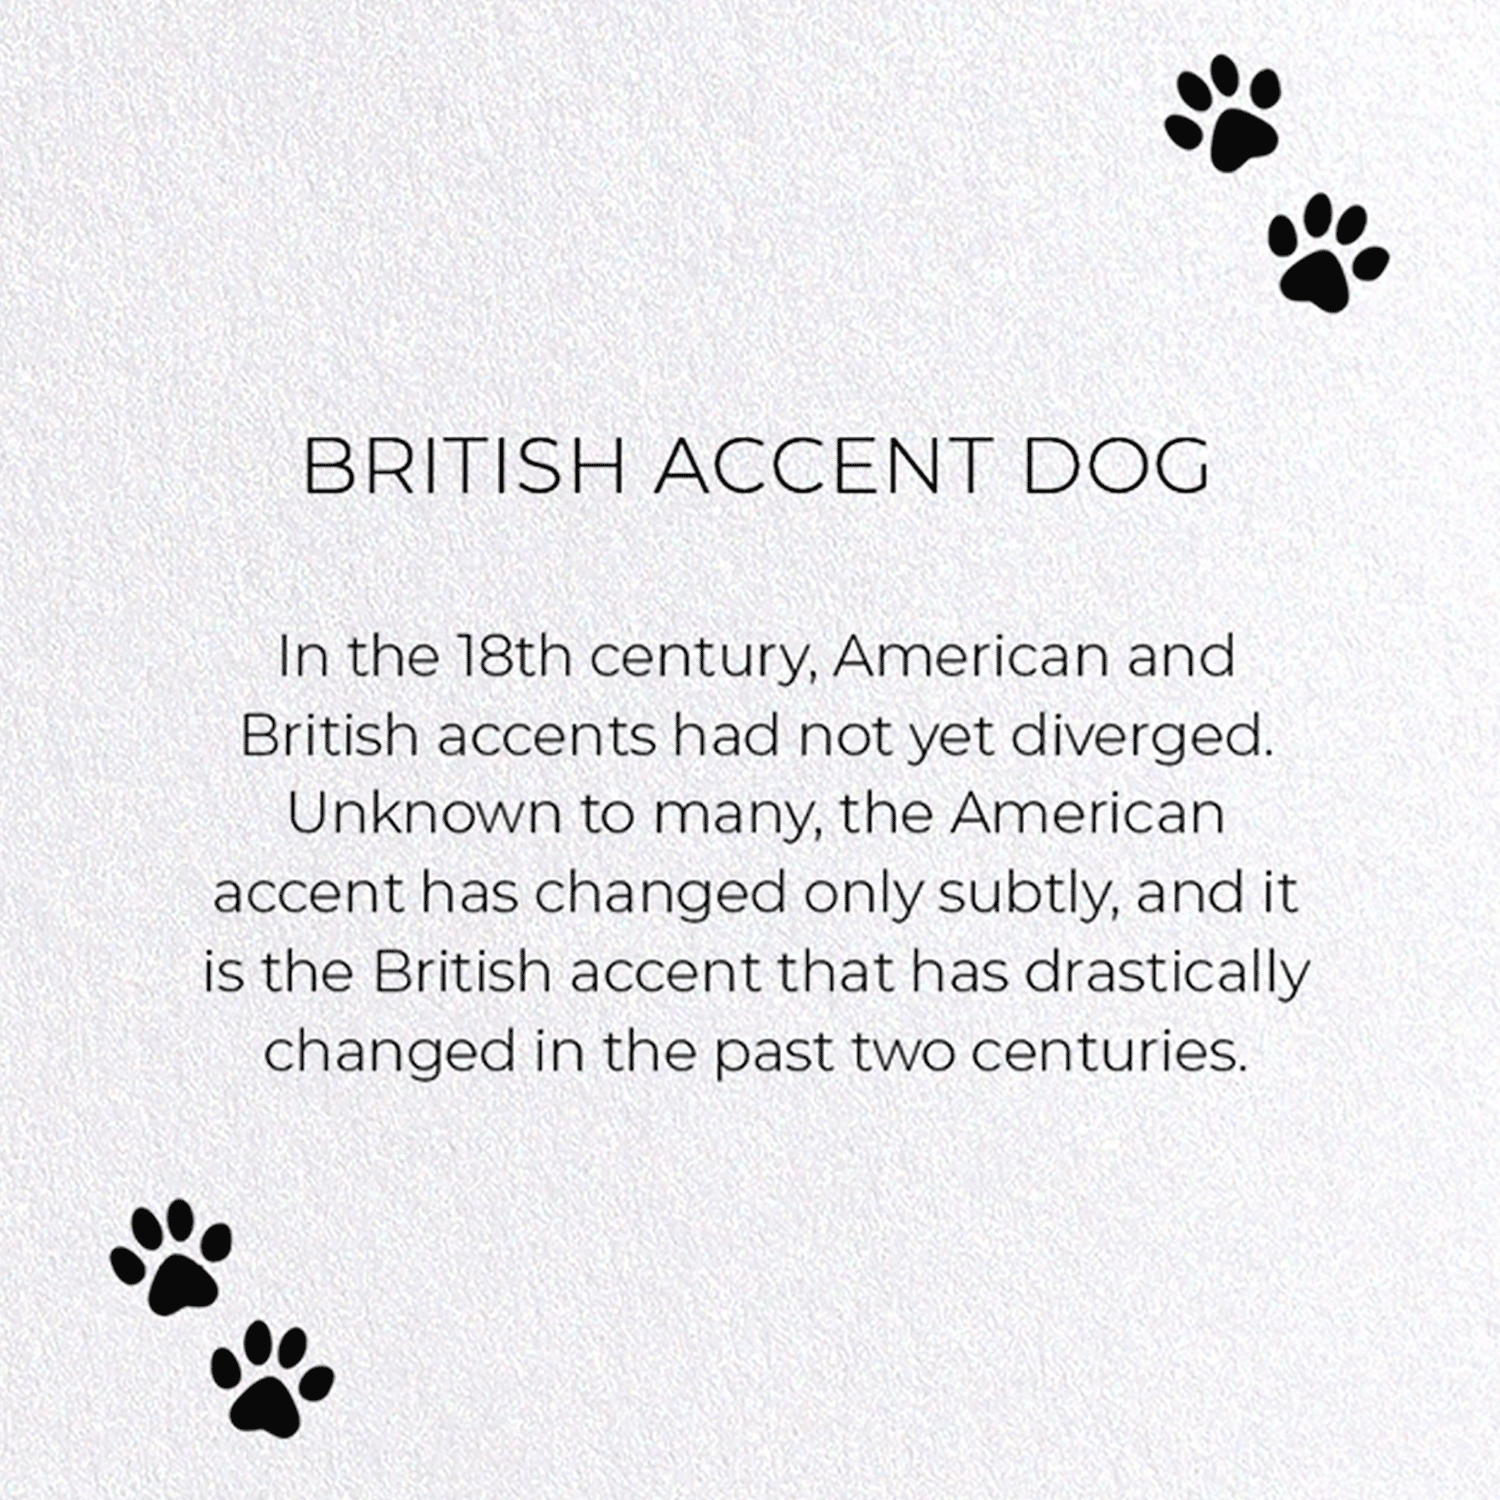 BRITISH ACCENT DOG: Funny Animal Greeting Card